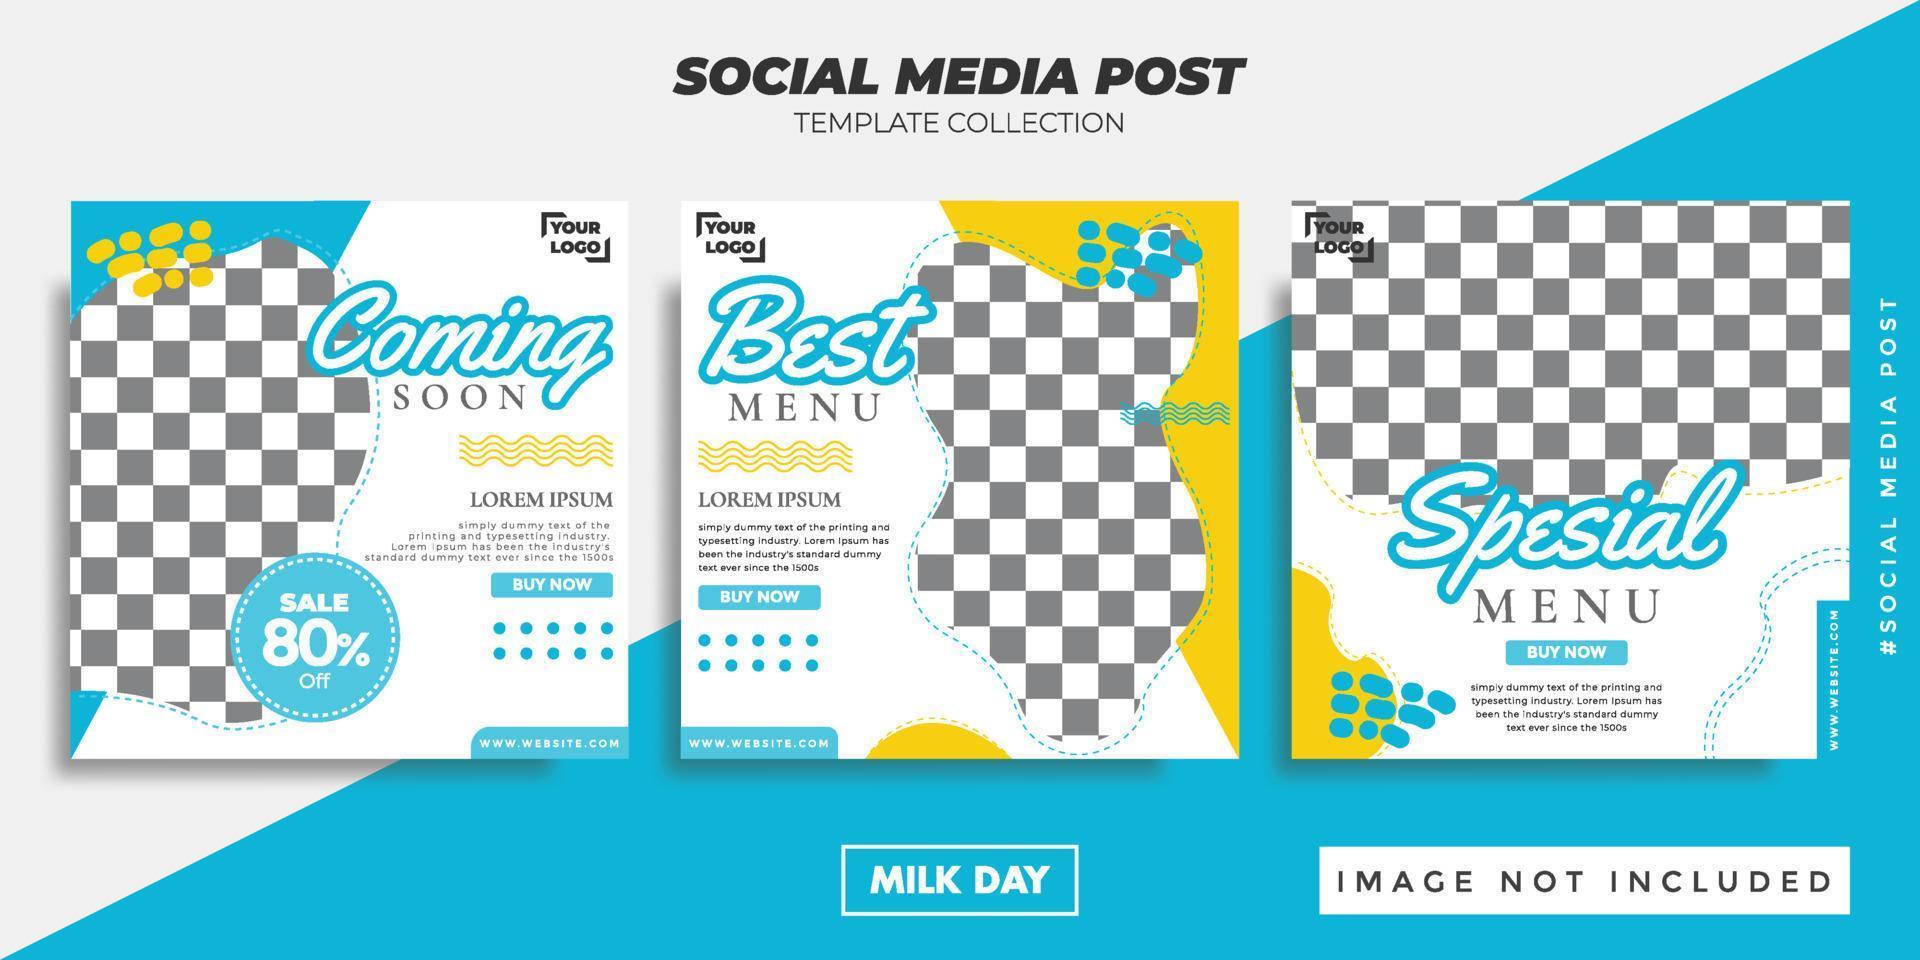 Social Media Post Template Food Milk Day vector